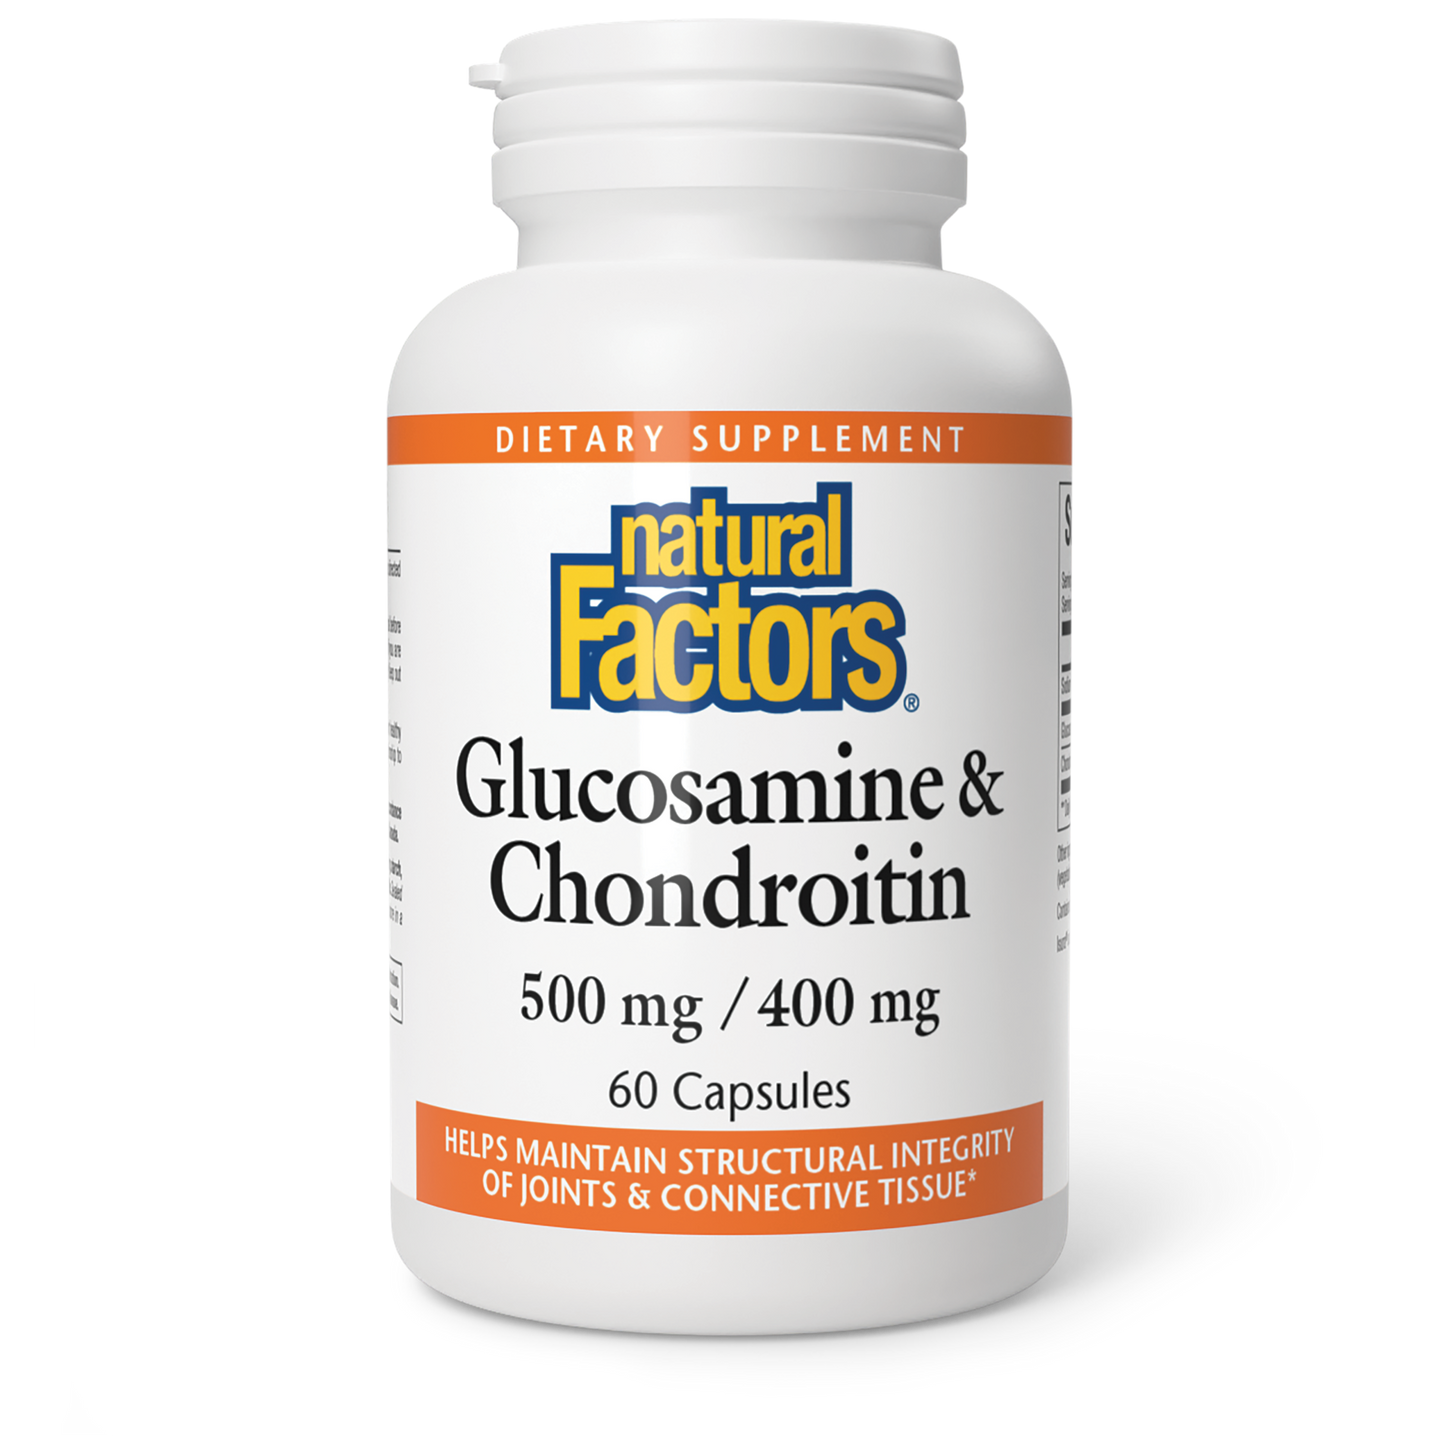 Glucosamine & Chondroitin|variant|hi-res|2686U